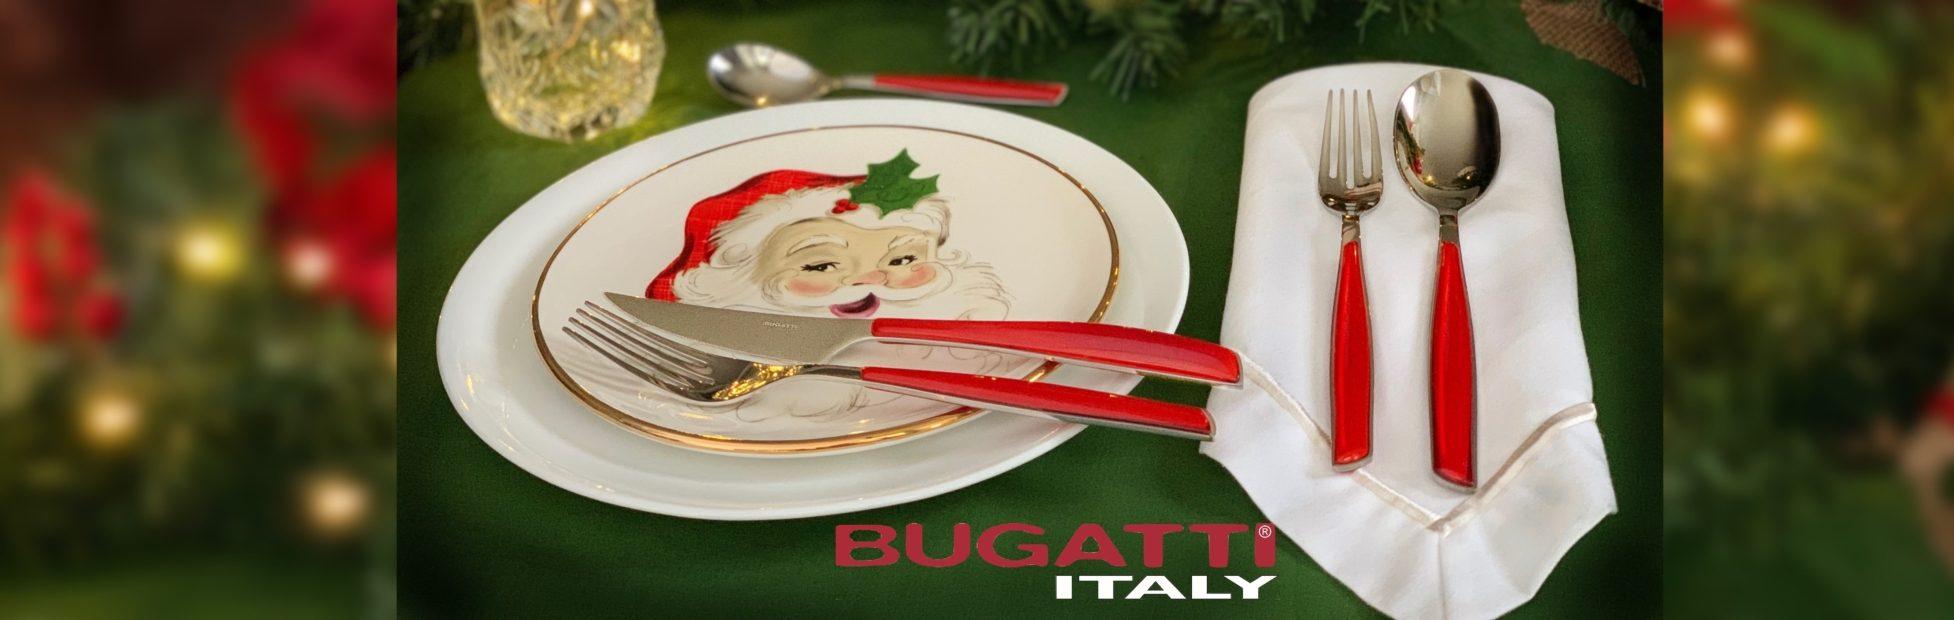 Bugatti Italy lifestyle products slide 13